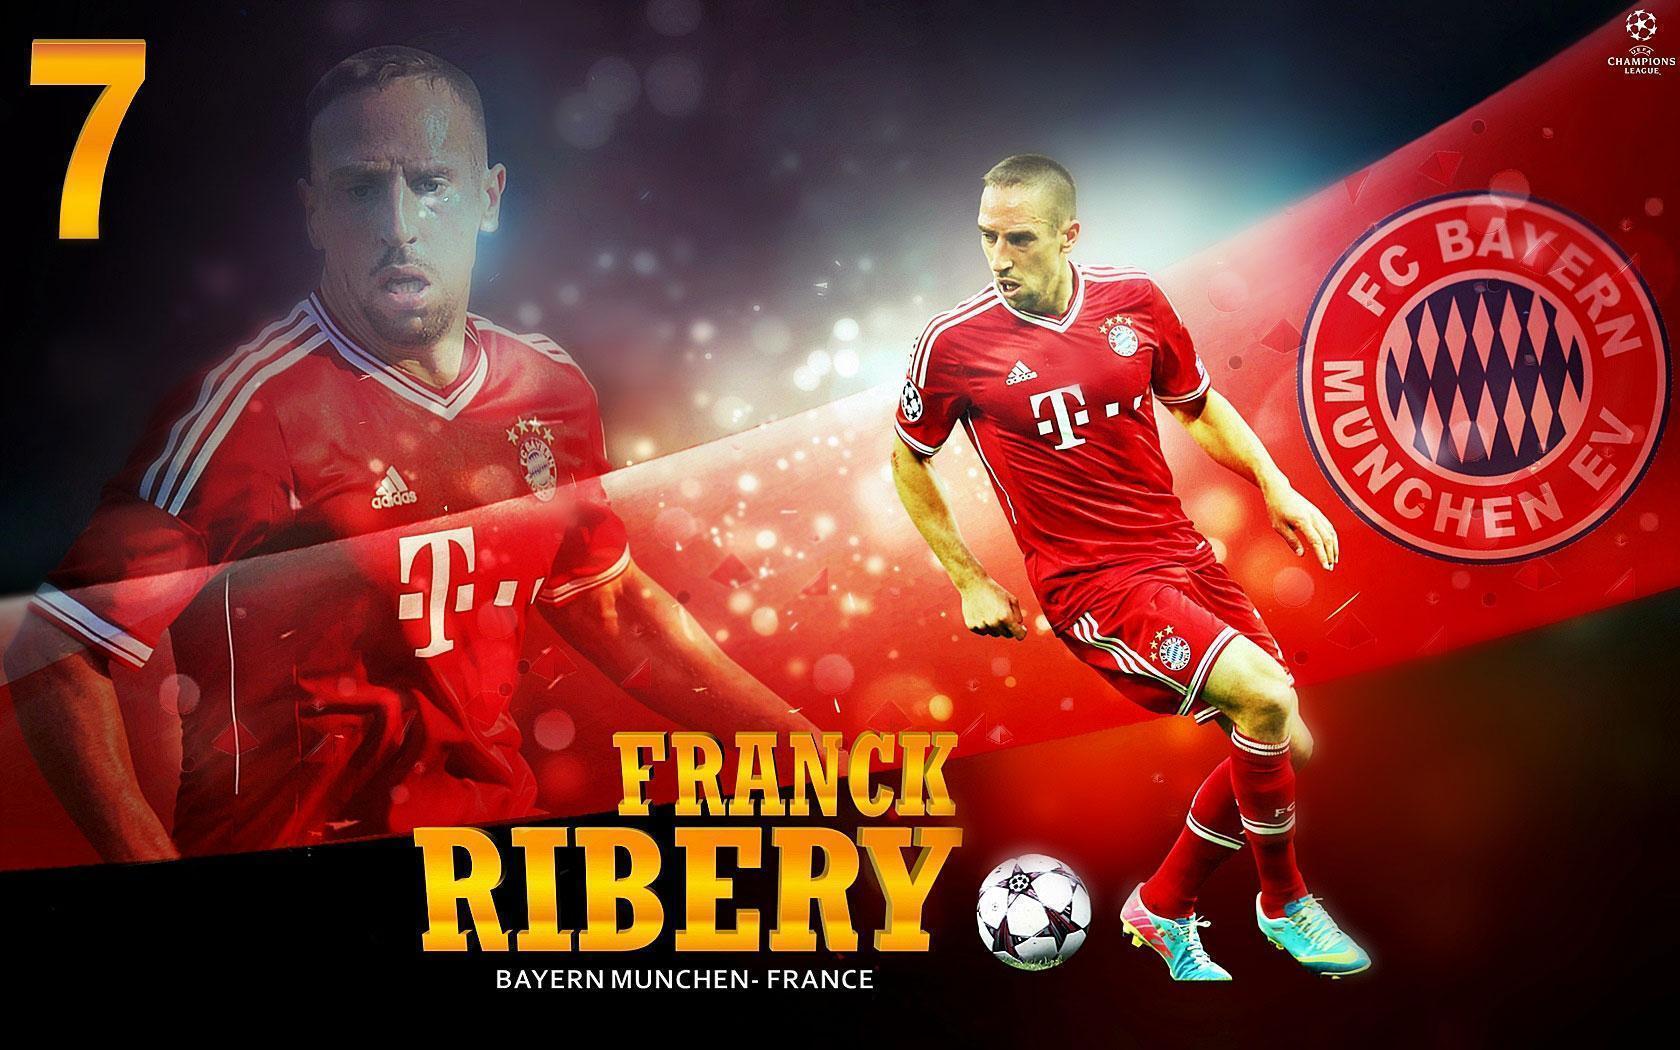 Franck Ribery HD Wallpaper Play Store revenue & download